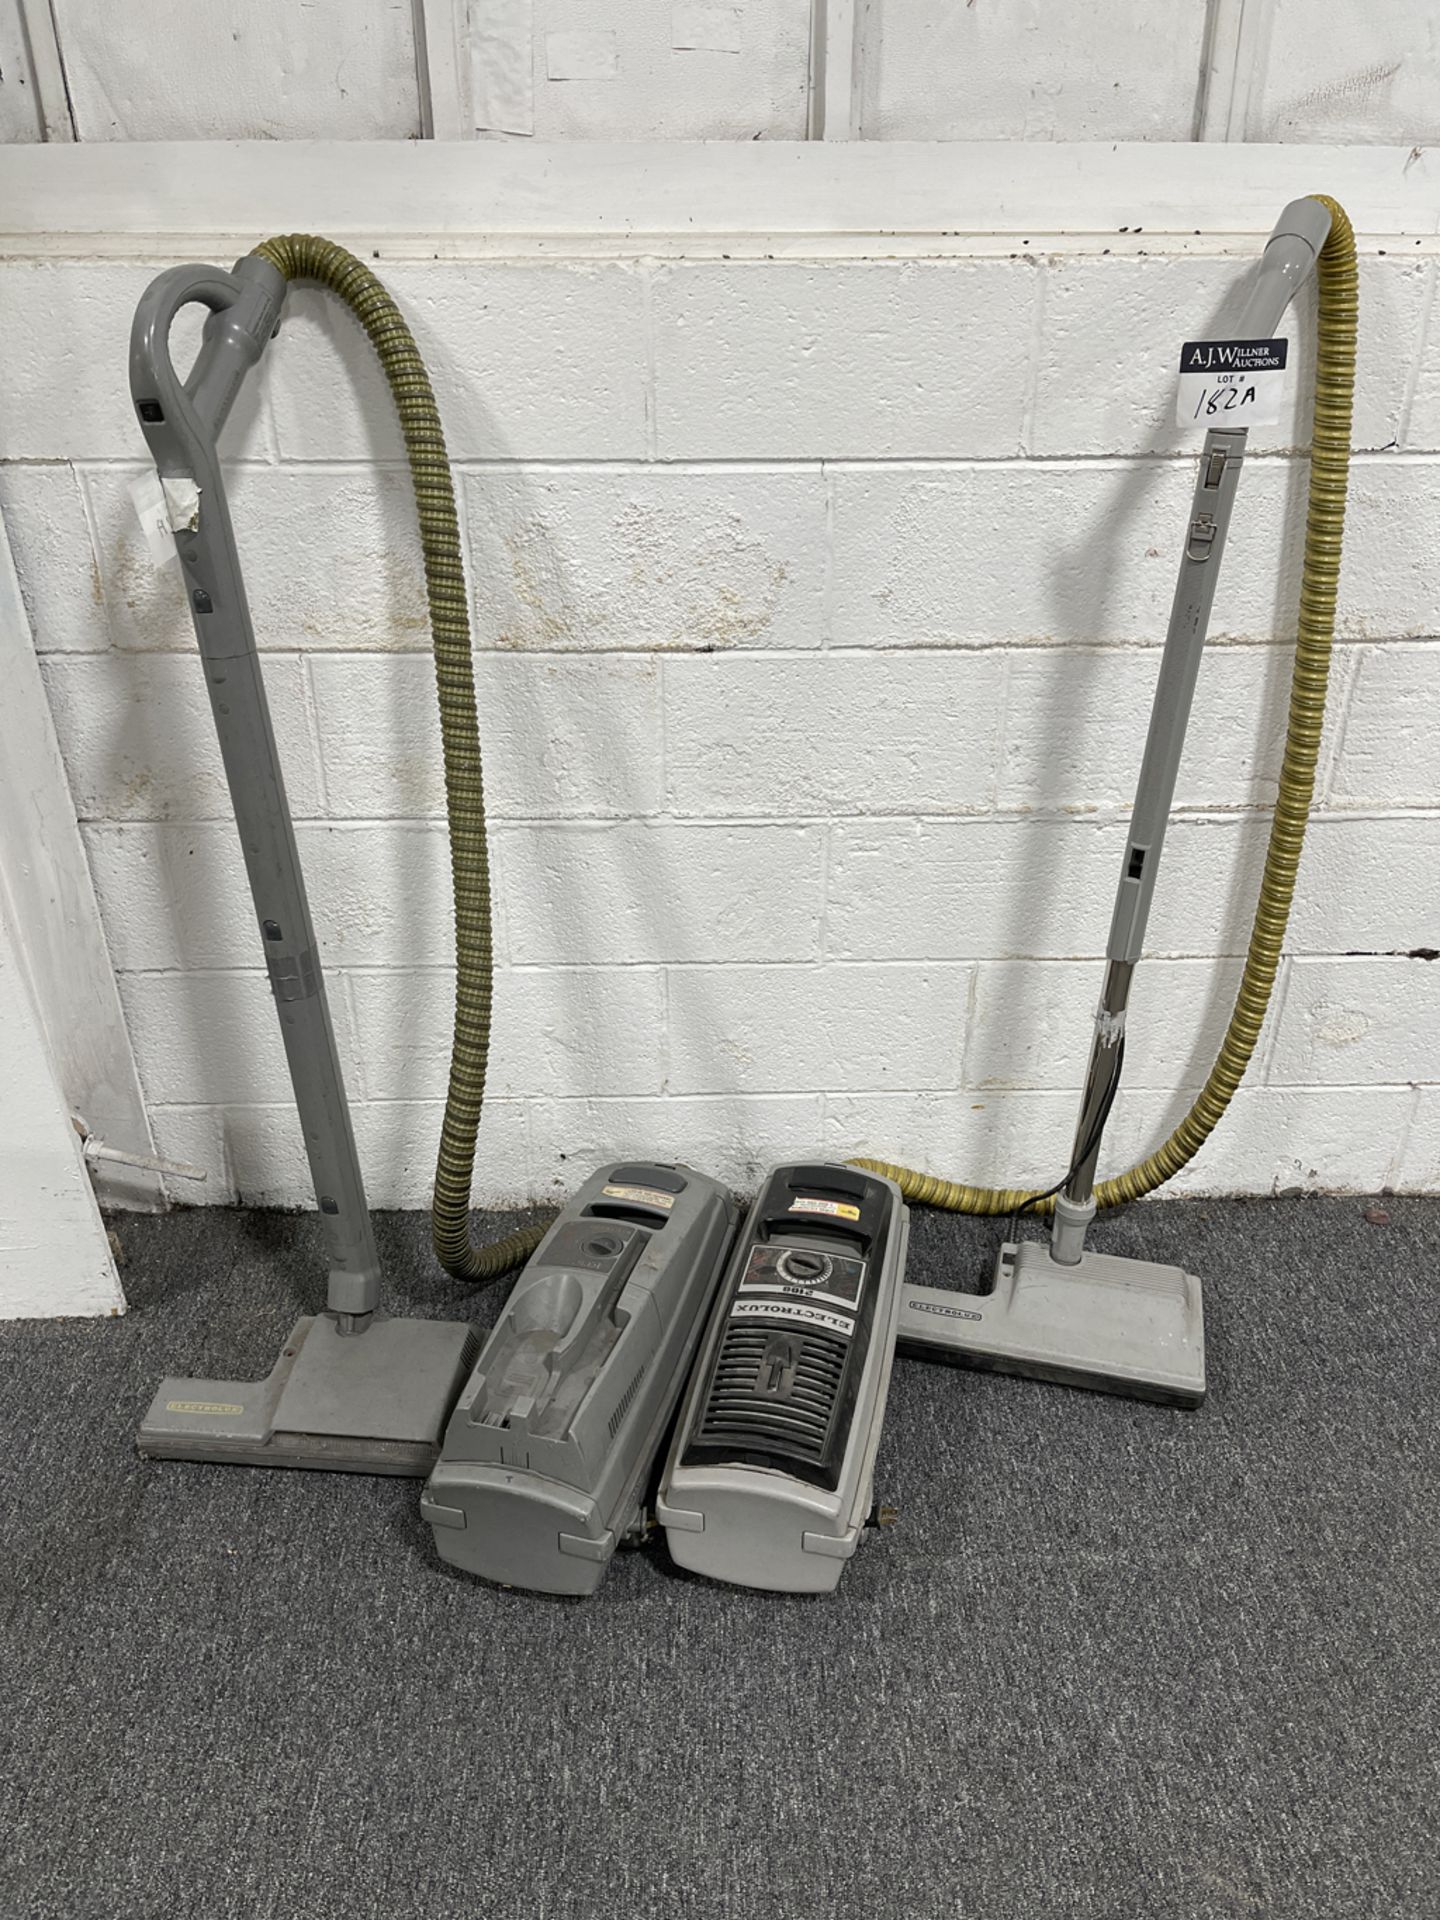 (Lot) Electrolux Cannister Vacuums -2 pcs